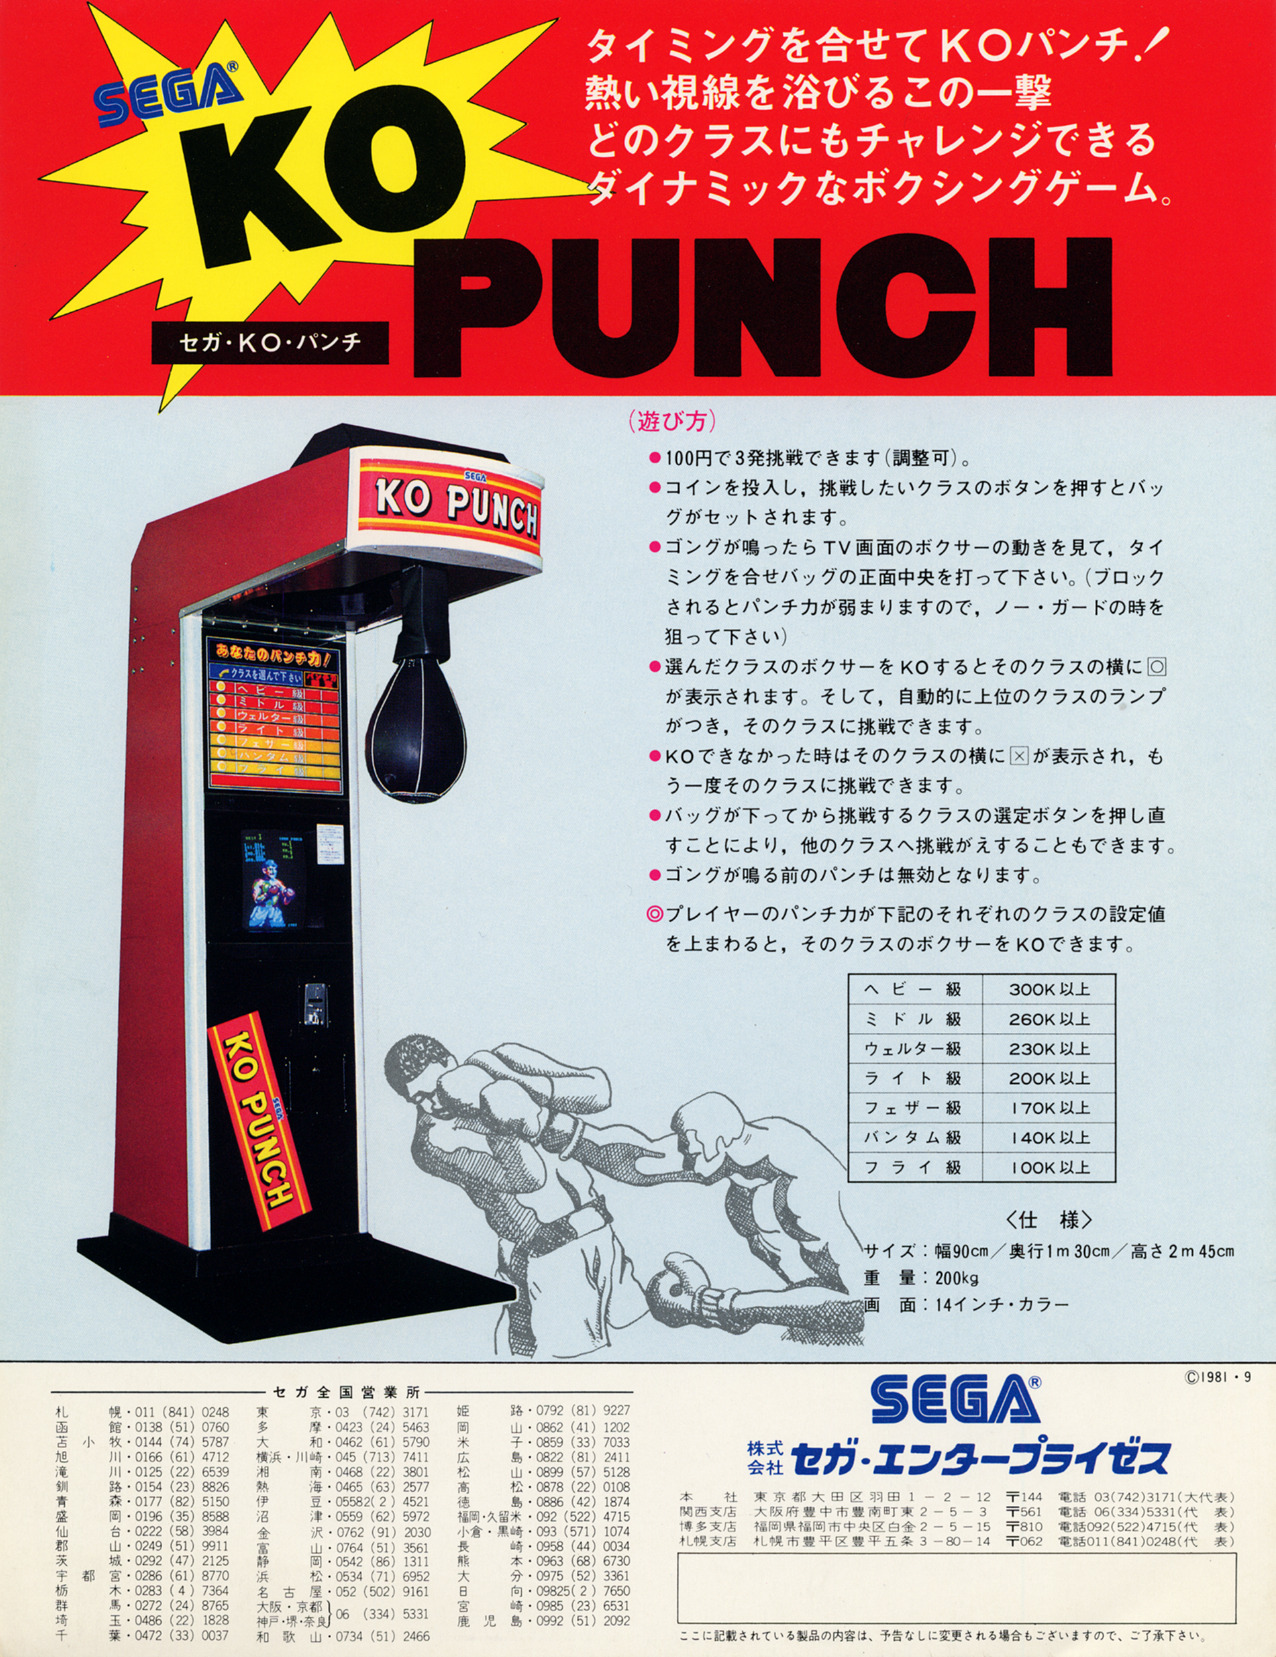 KOPunch Arcade JP Flyer.jpg